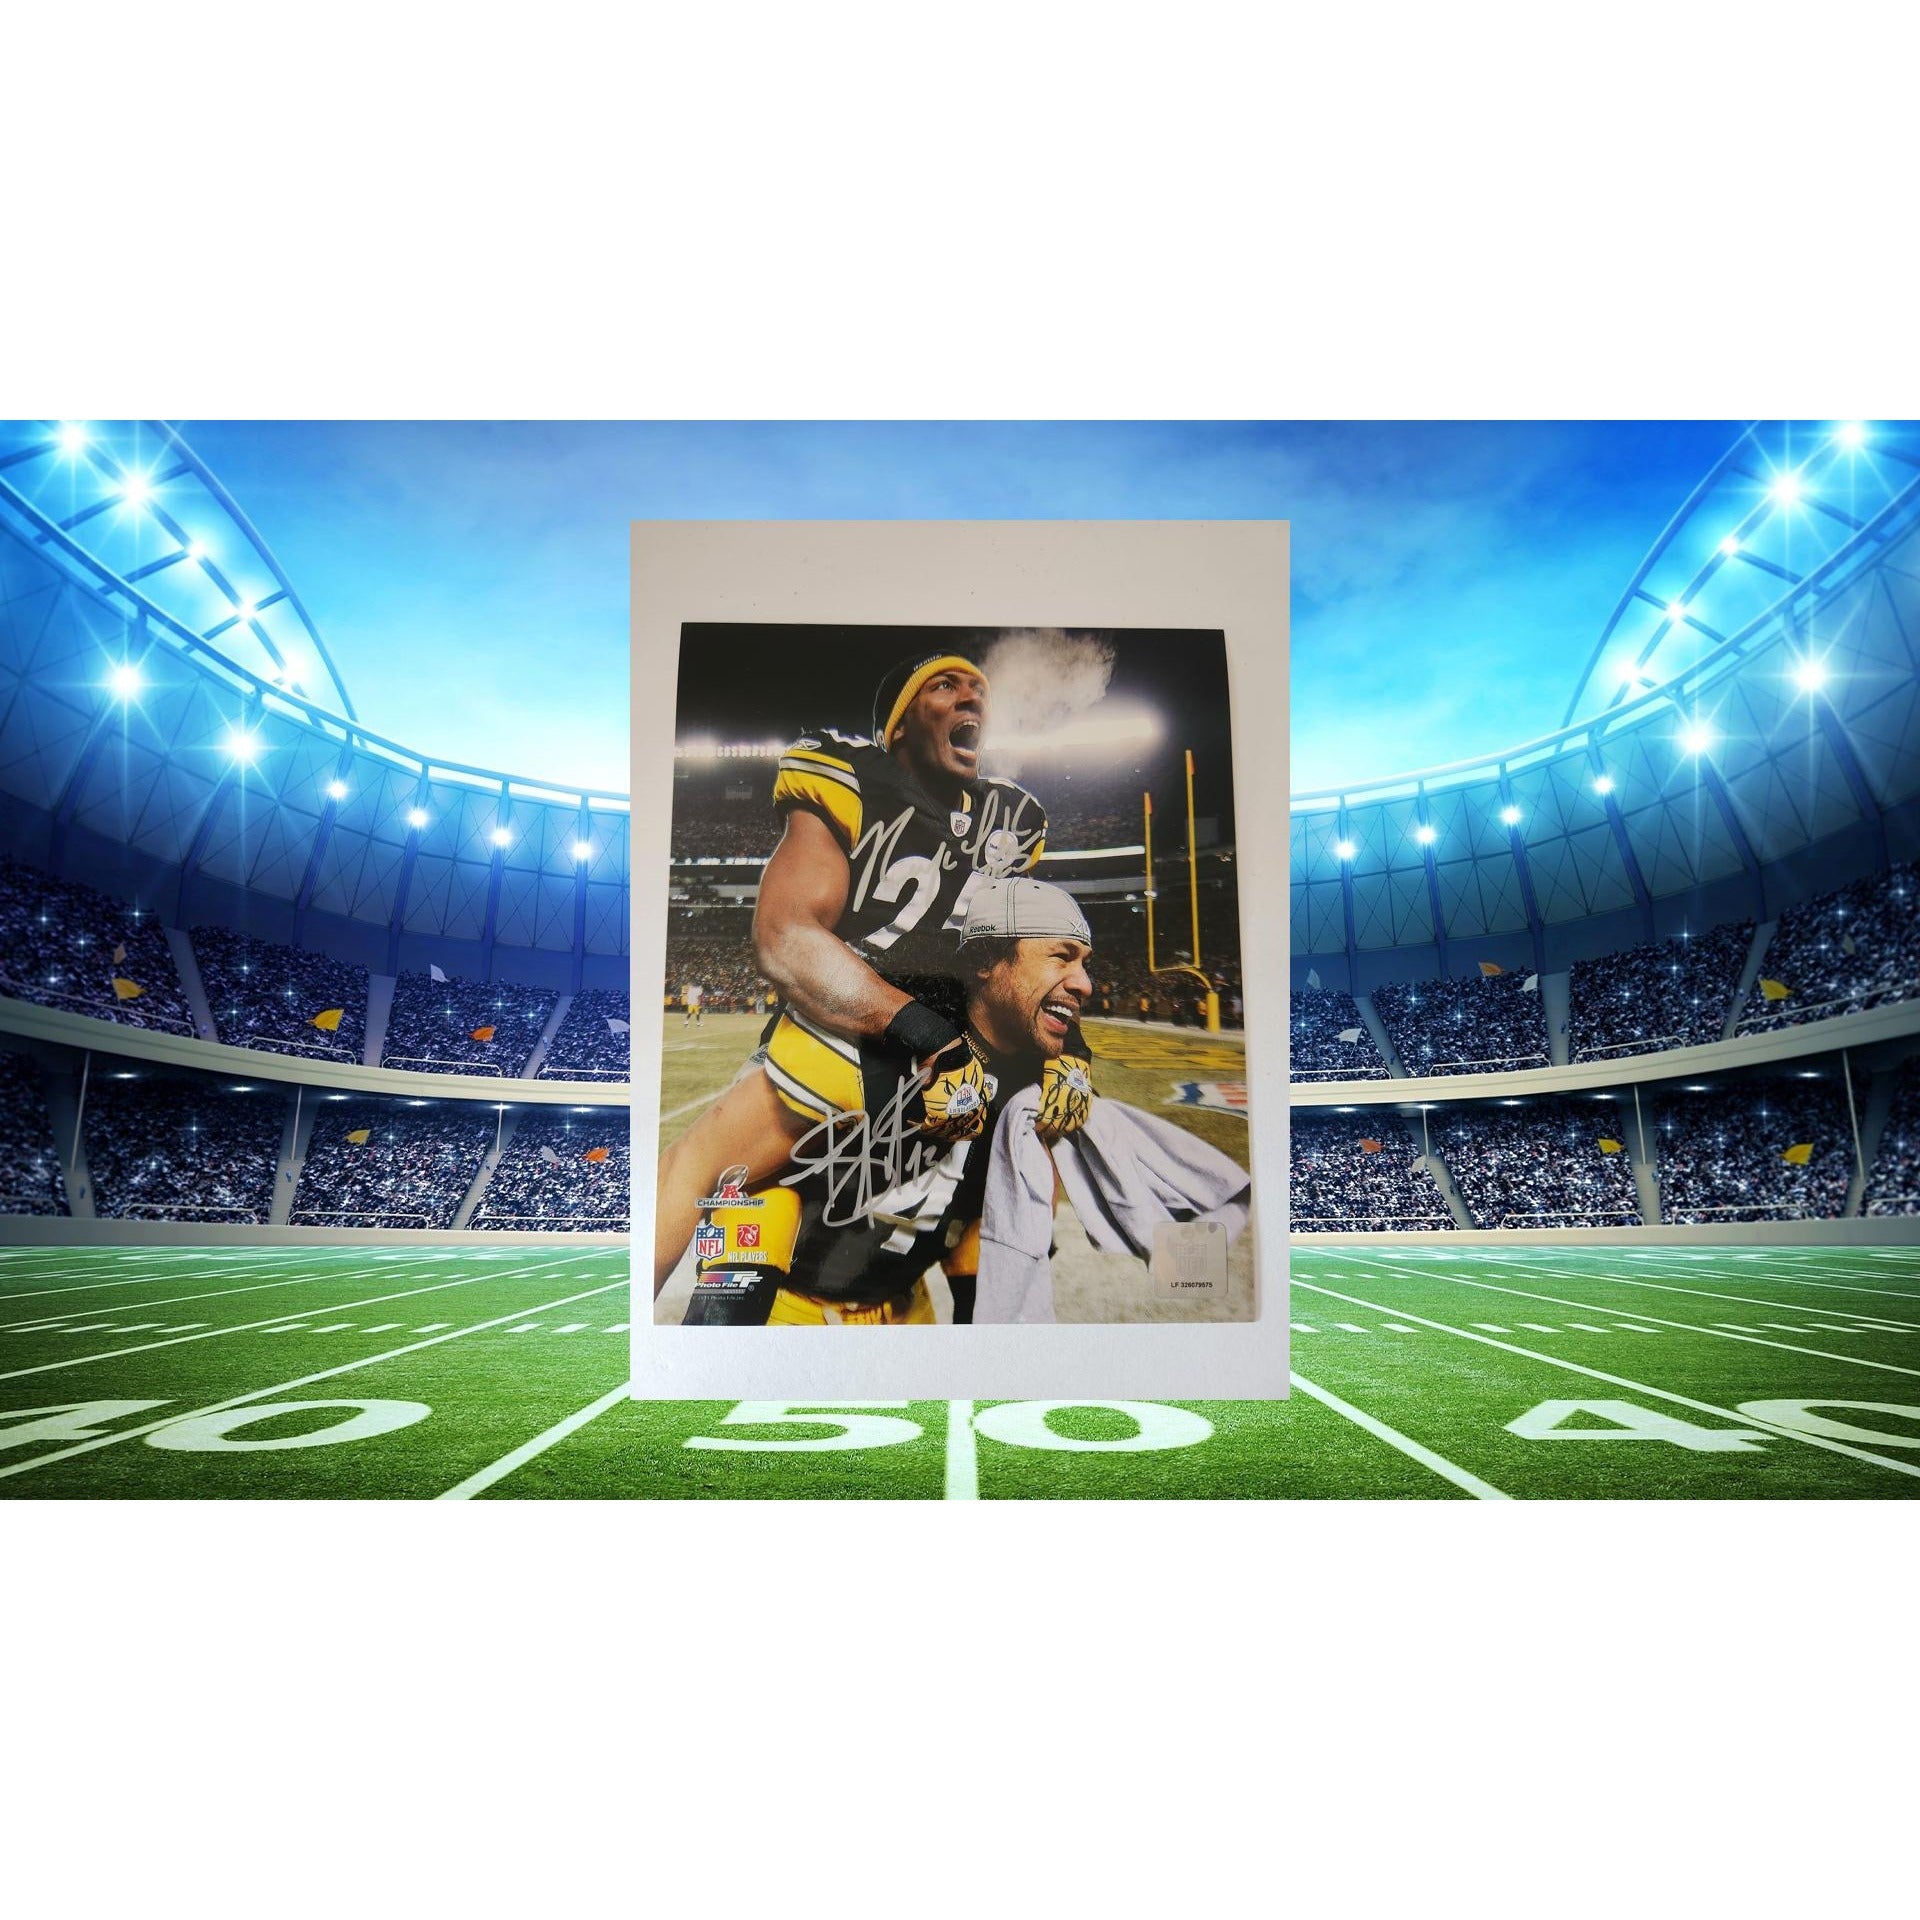 Ryan Clark and Troy Polamalu Pittsburgh Steelers 8x10 photo signed